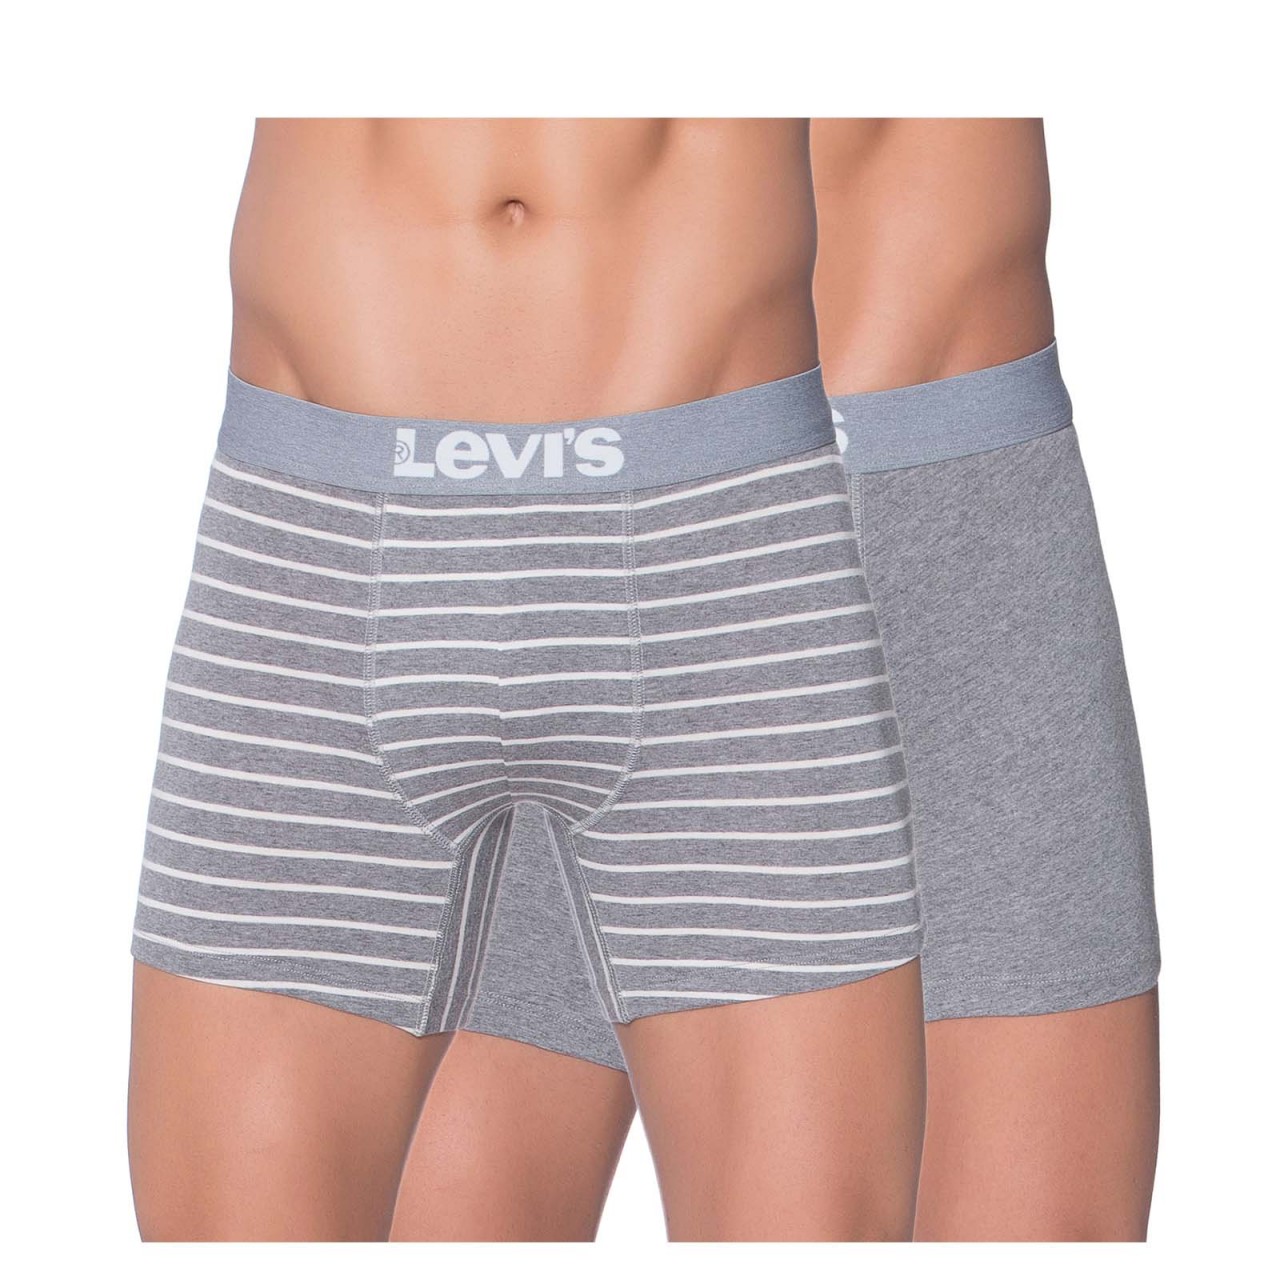 Levis Boxer Brief 2 Pack Stripe Grey